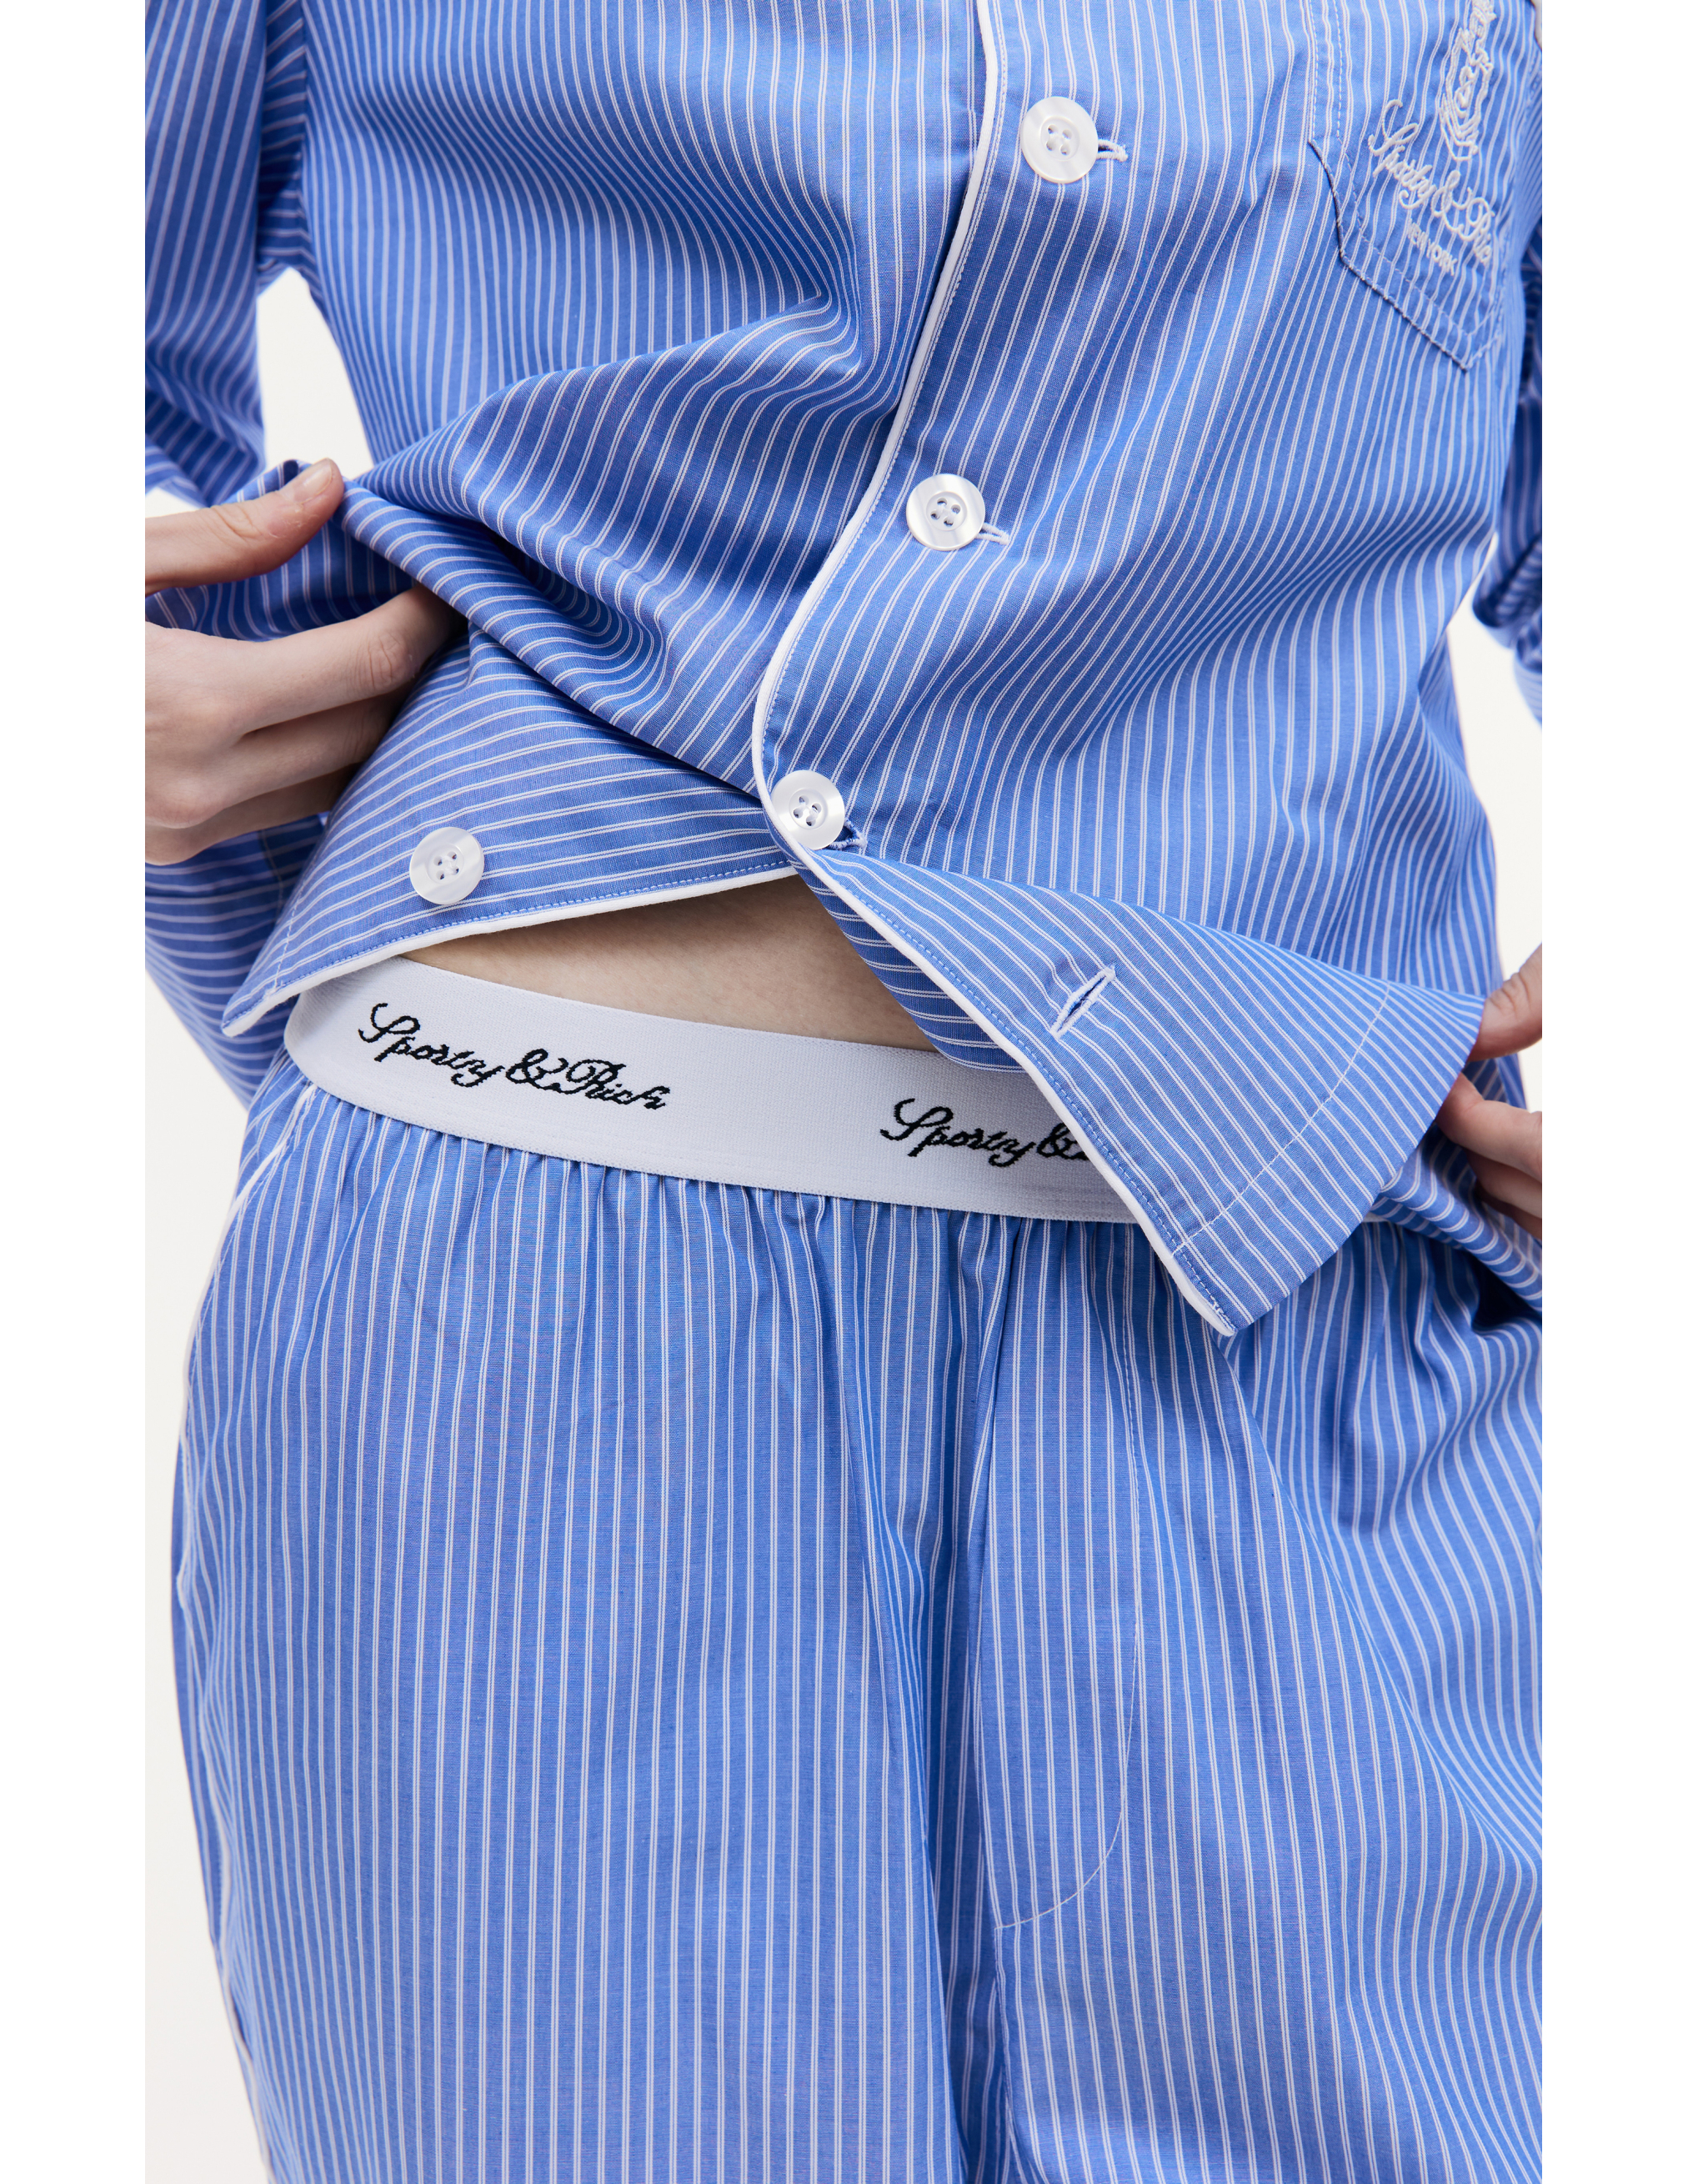 Пижамные брюки в полоску SPORTY & RICH PJAW236BL, размер S;M;L;XL - фото 4